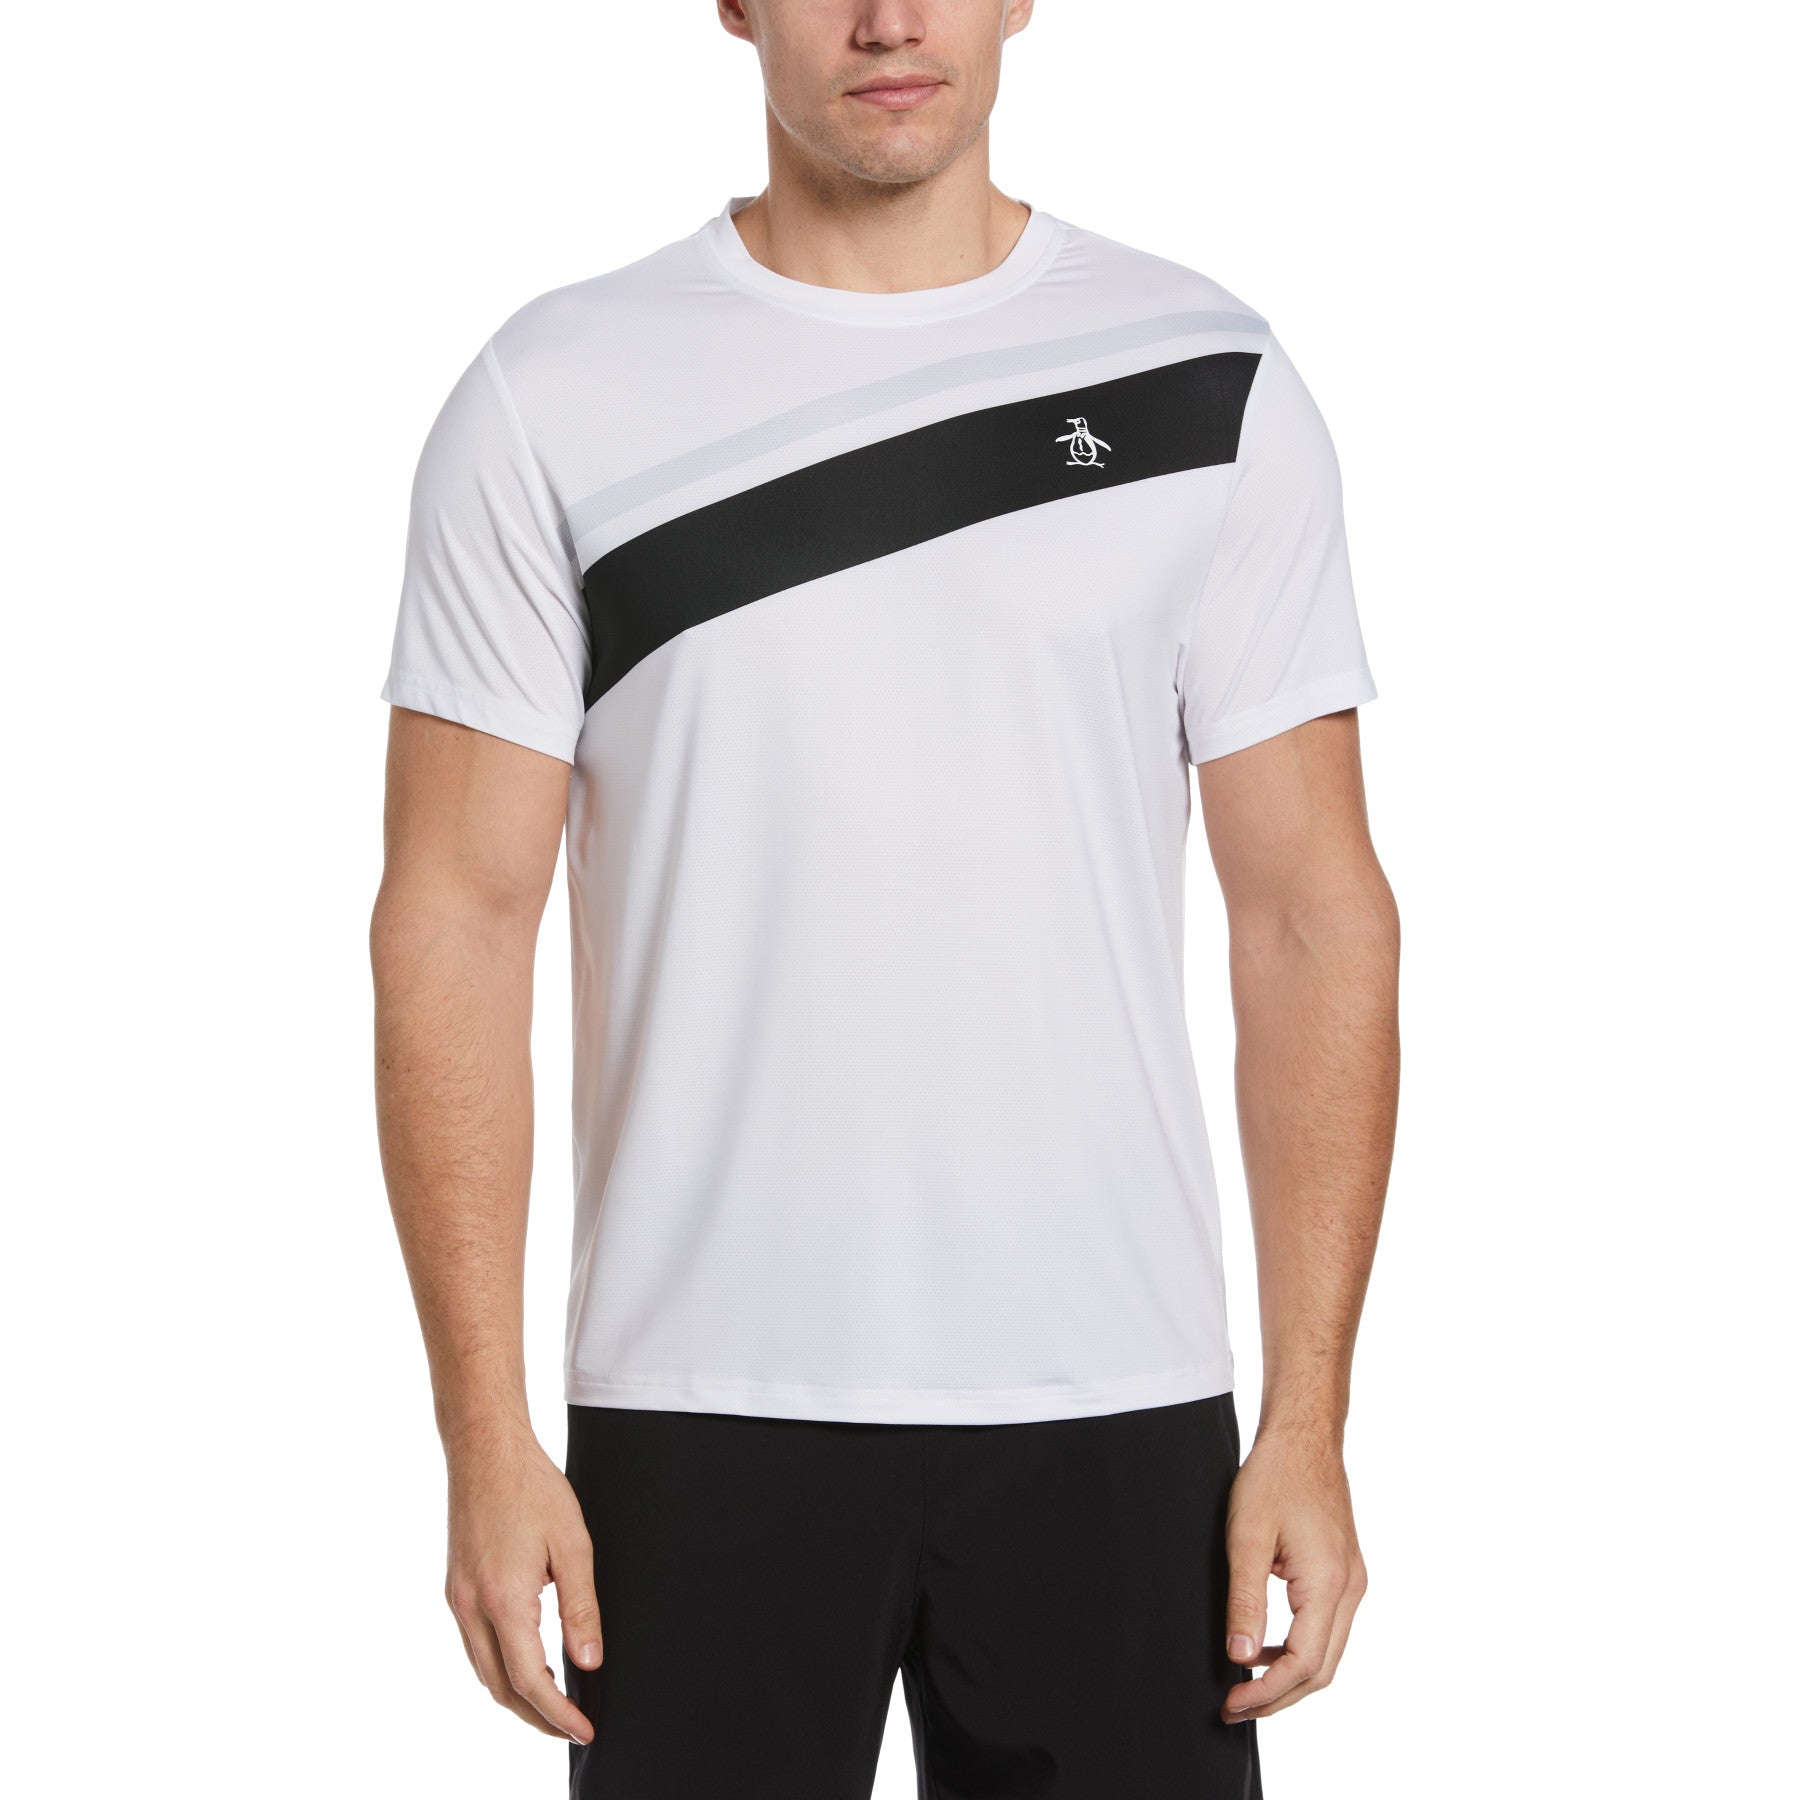 View Original Penguin Colour Block Stripe Performance Tennis TShirt In Bright White White Mens information